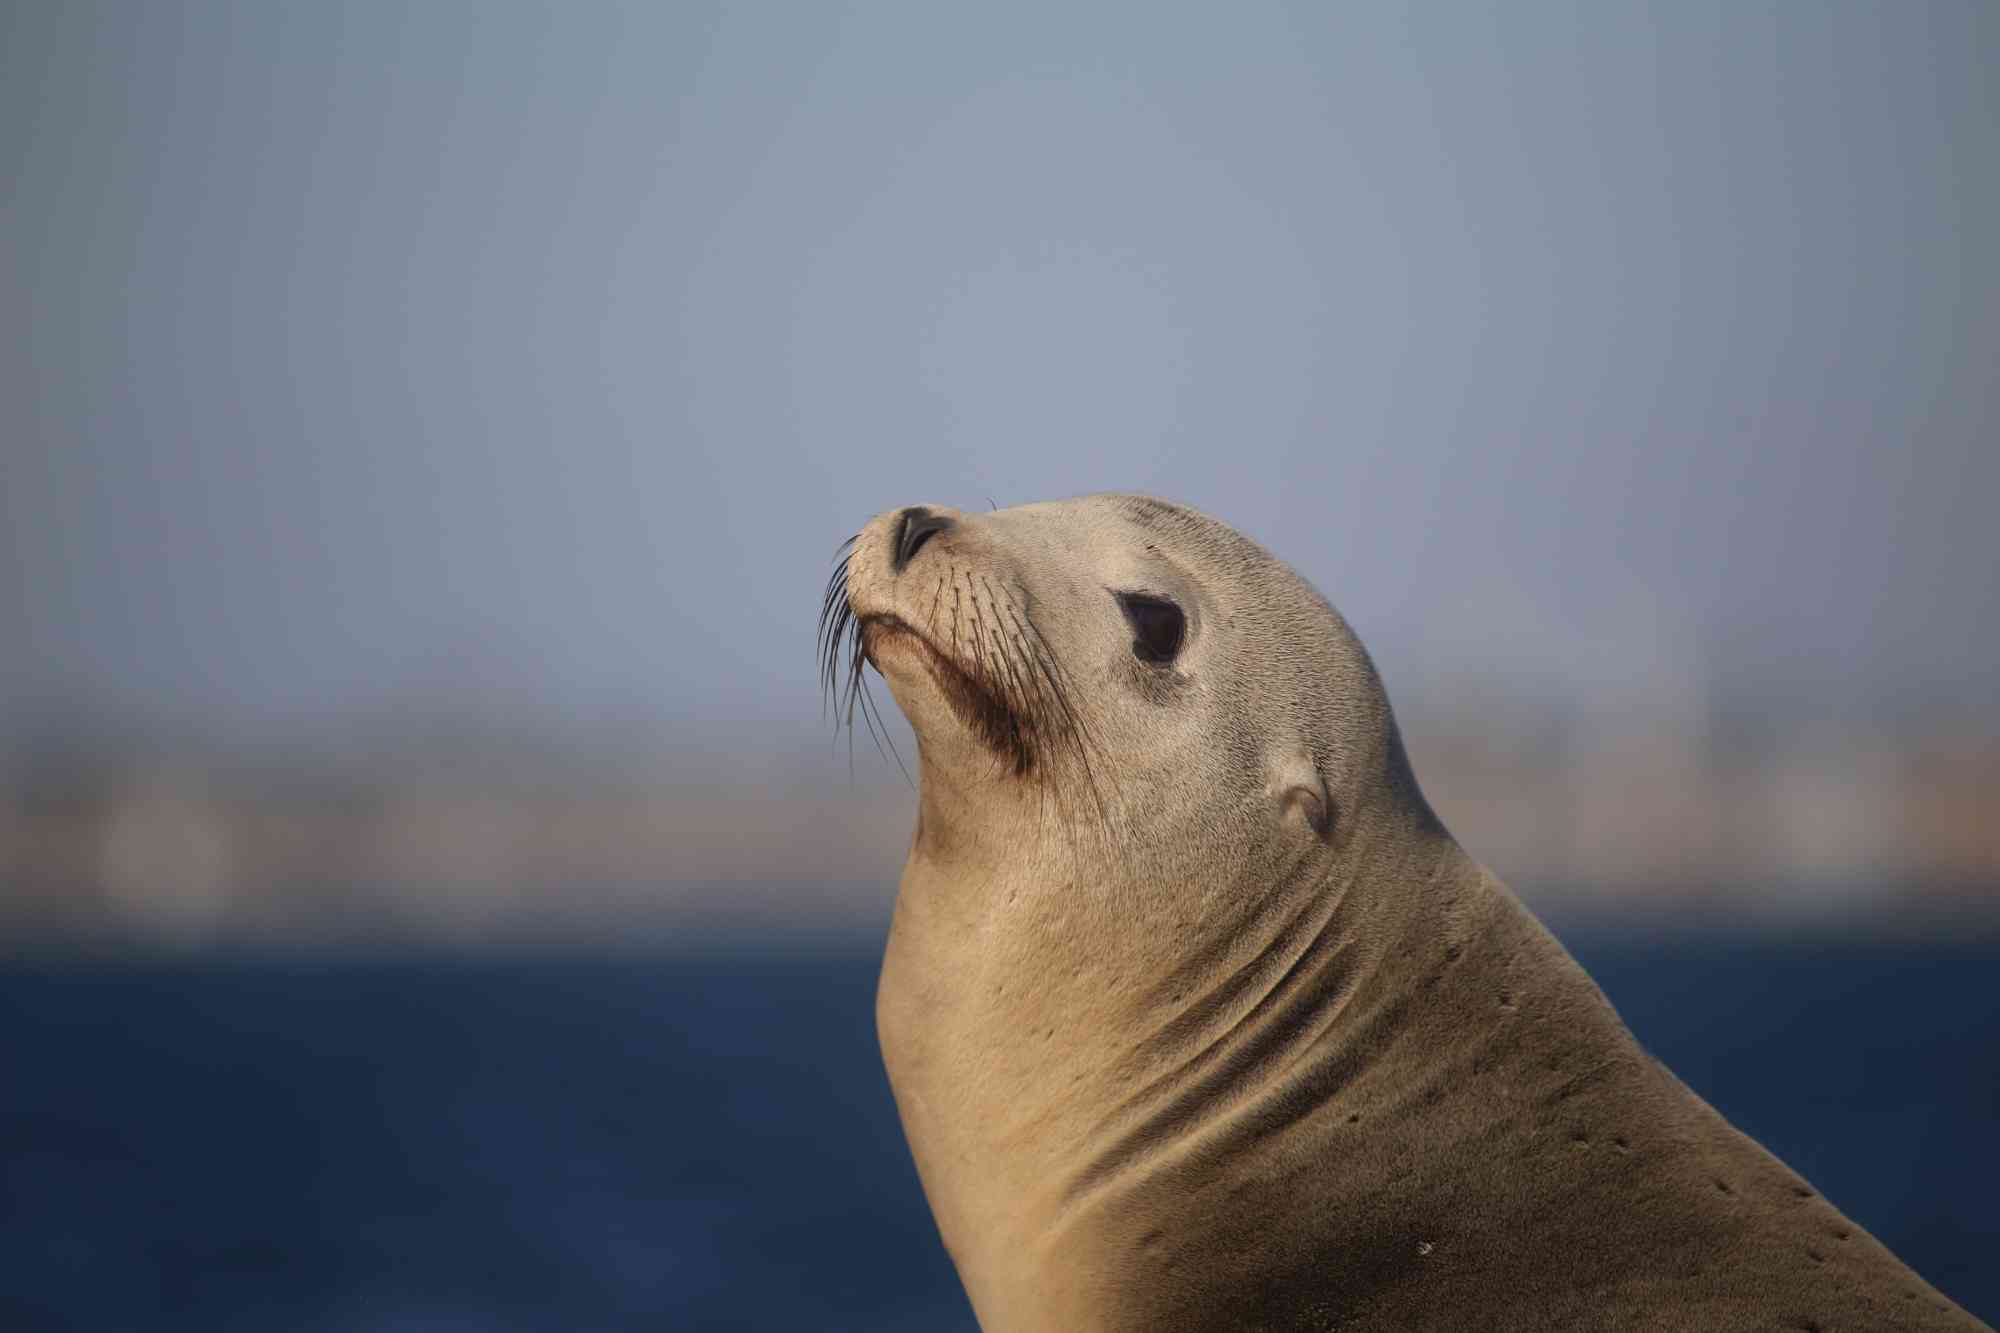 Stellar sea lion posing